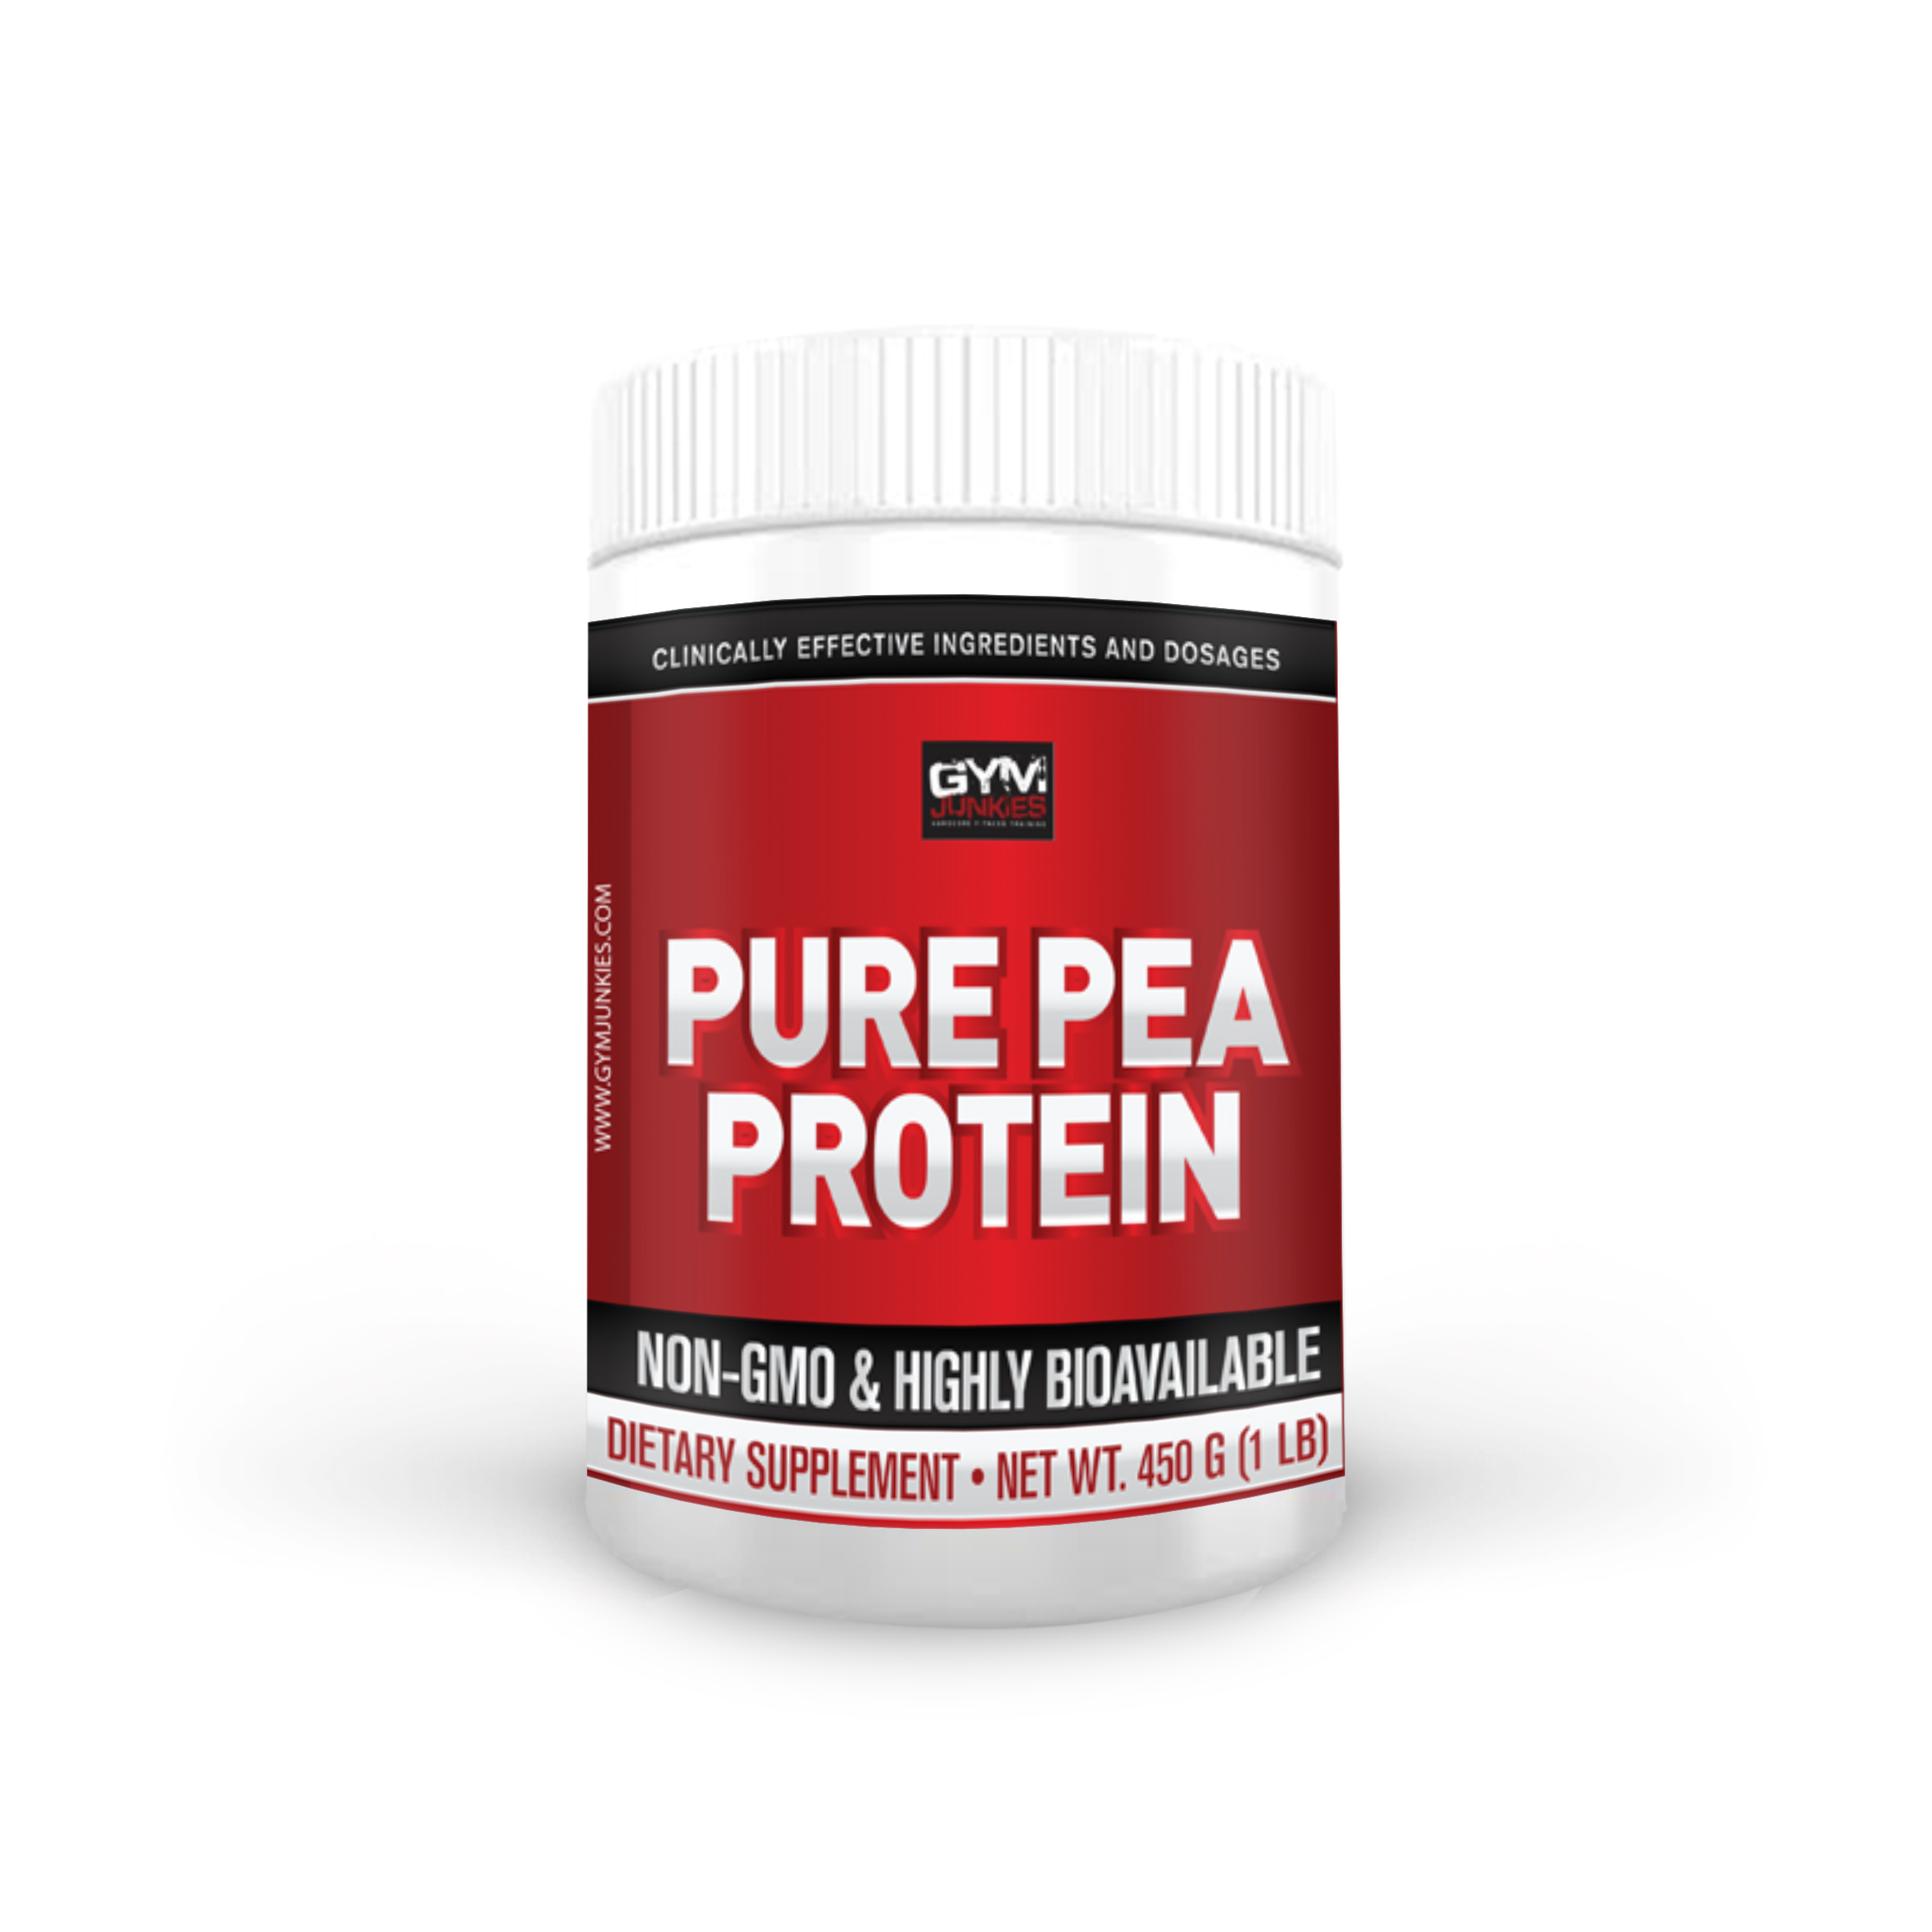 Gym Junkies Pea Protein